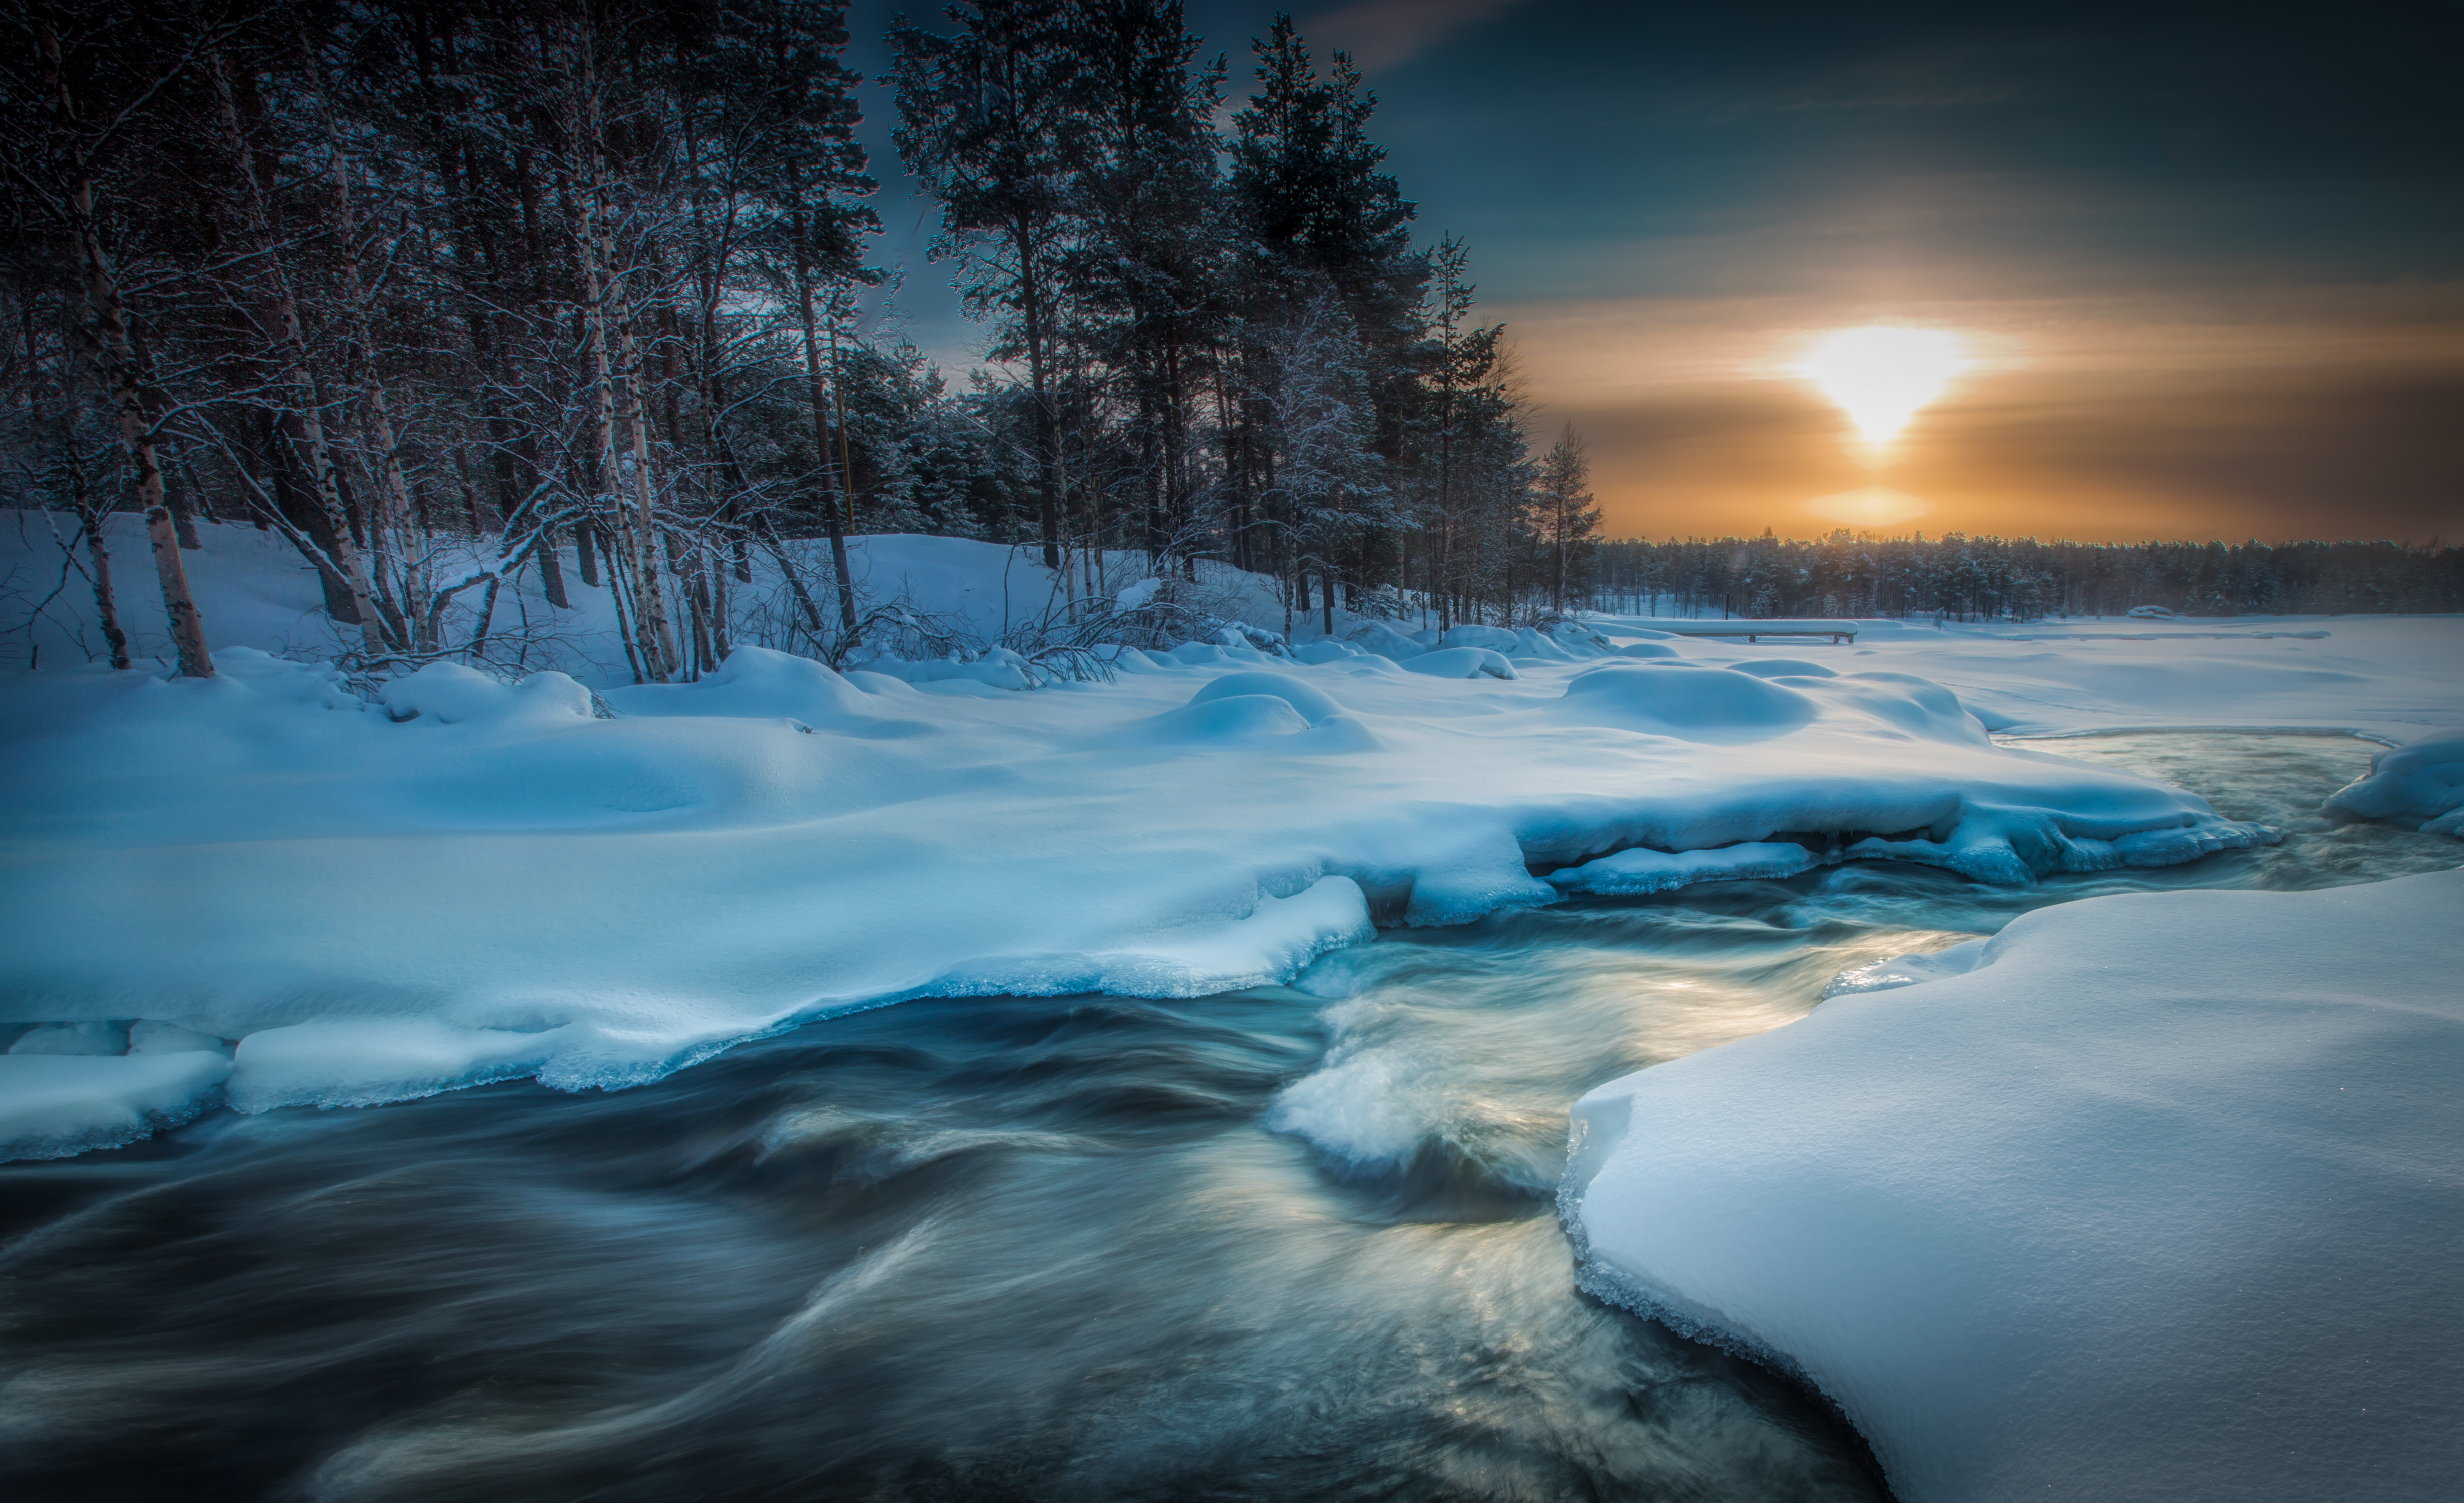 Обои зима пейзажи Финляндия на рабочий стол